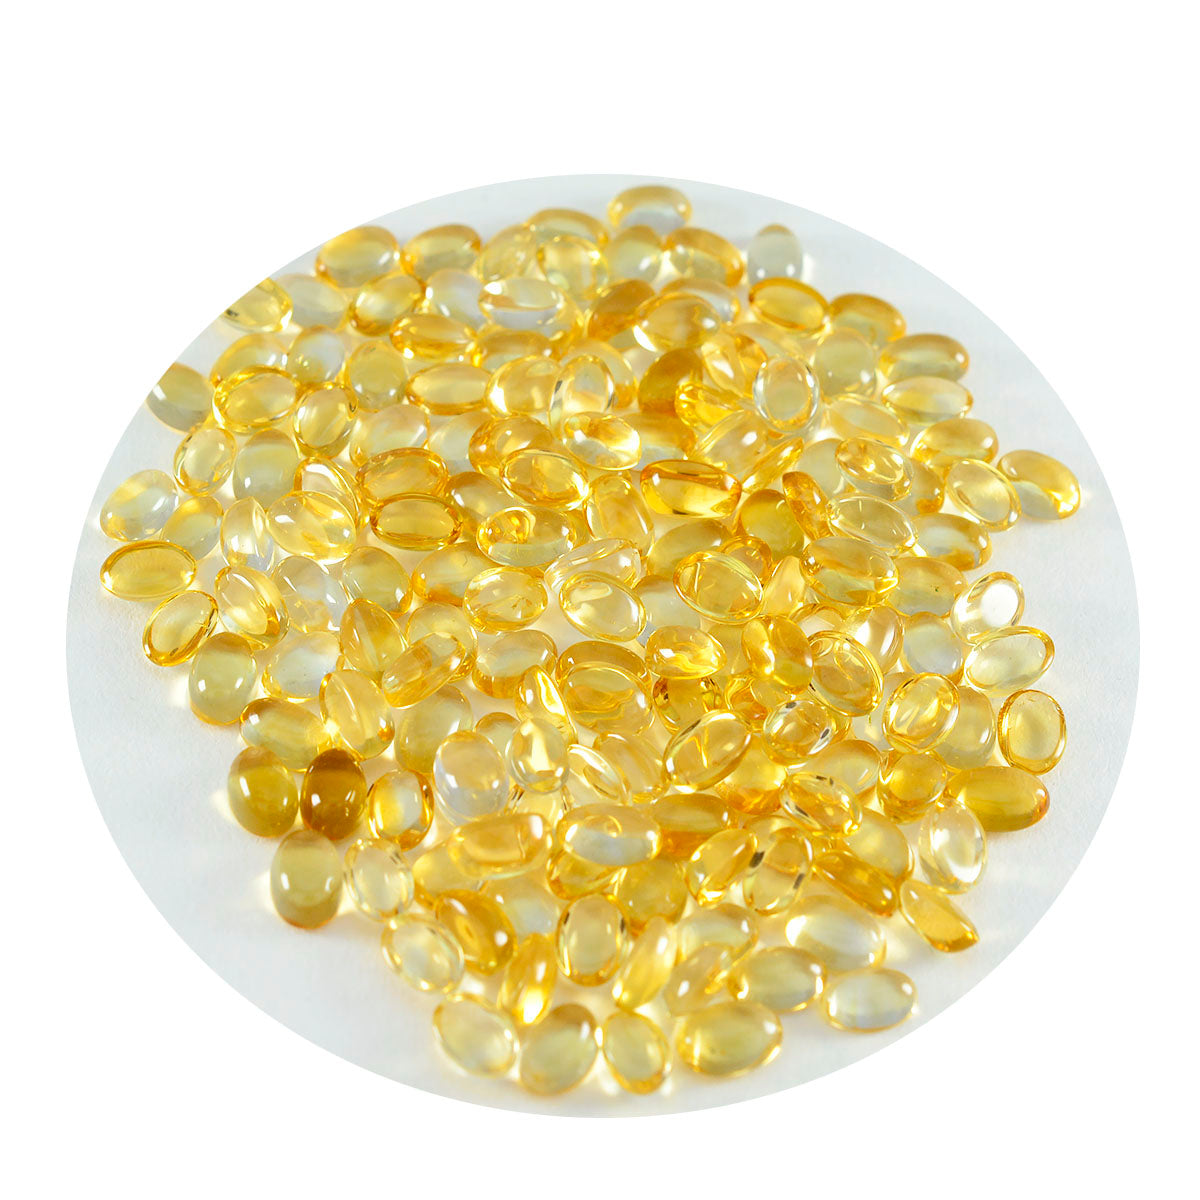 Riyogems 1PC Yellow Citrine Cabochon 3x5 mm Oval Shape beautiful Quality Loose Gems